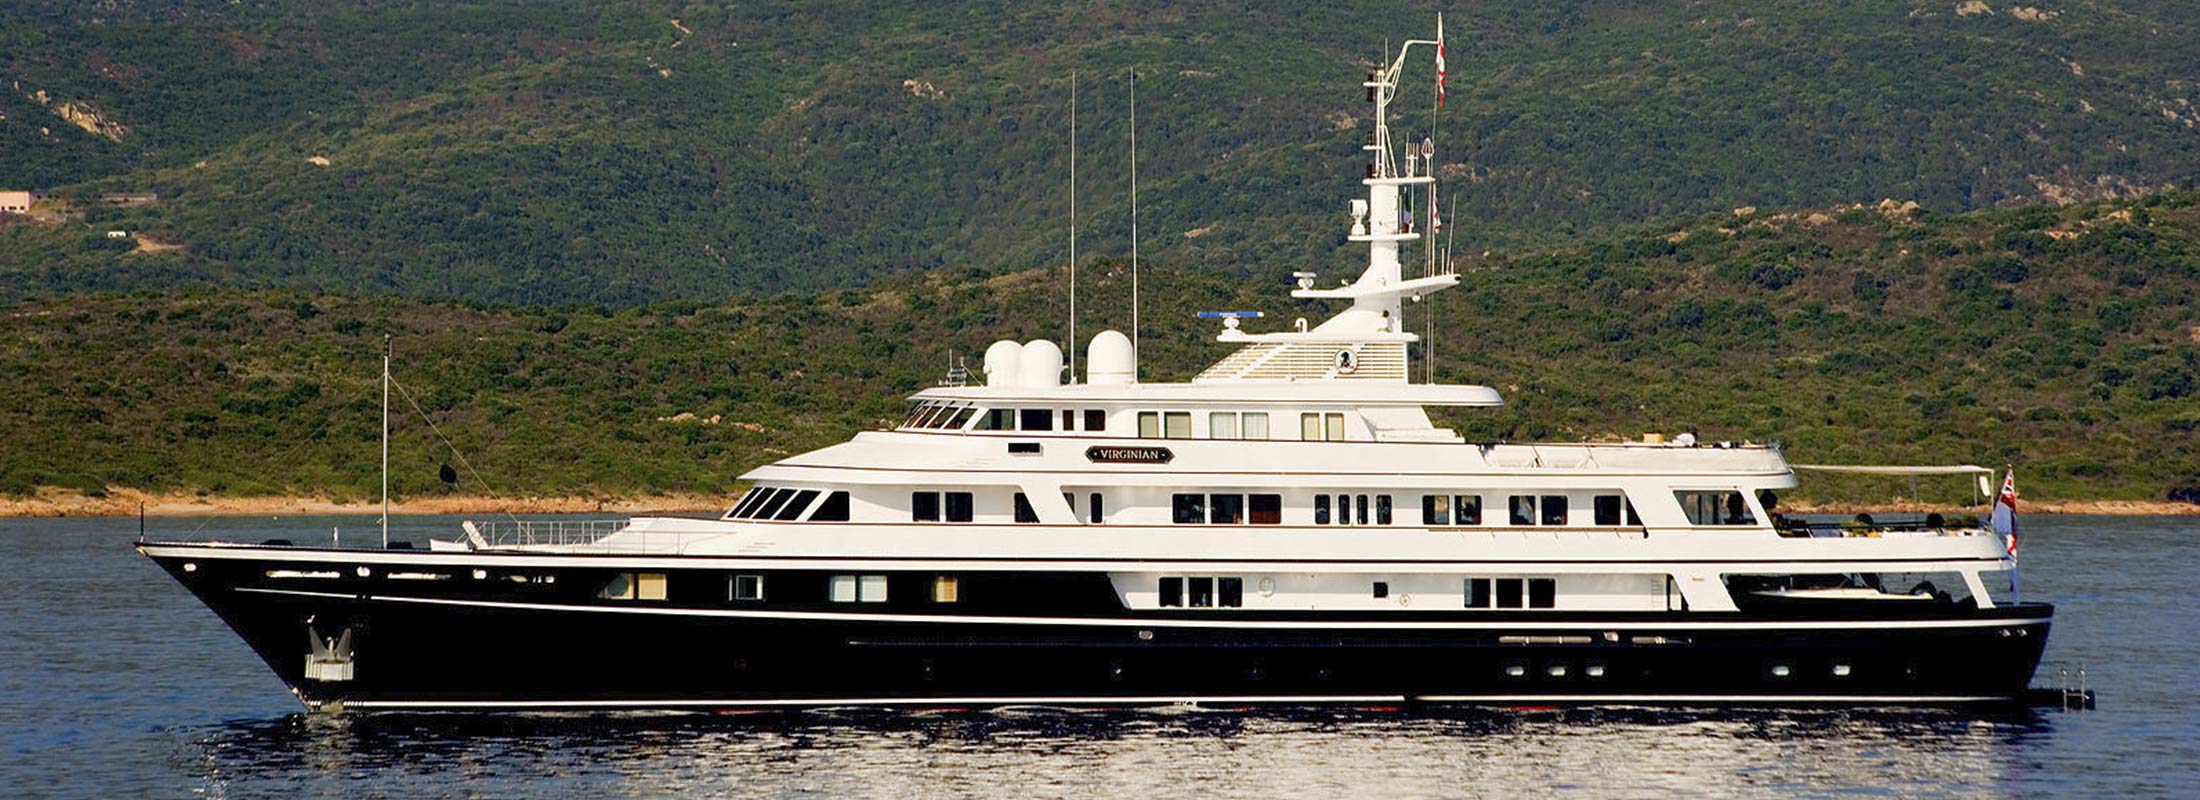 Virginian Motor Yacht for Charter Mediterranean slider 2